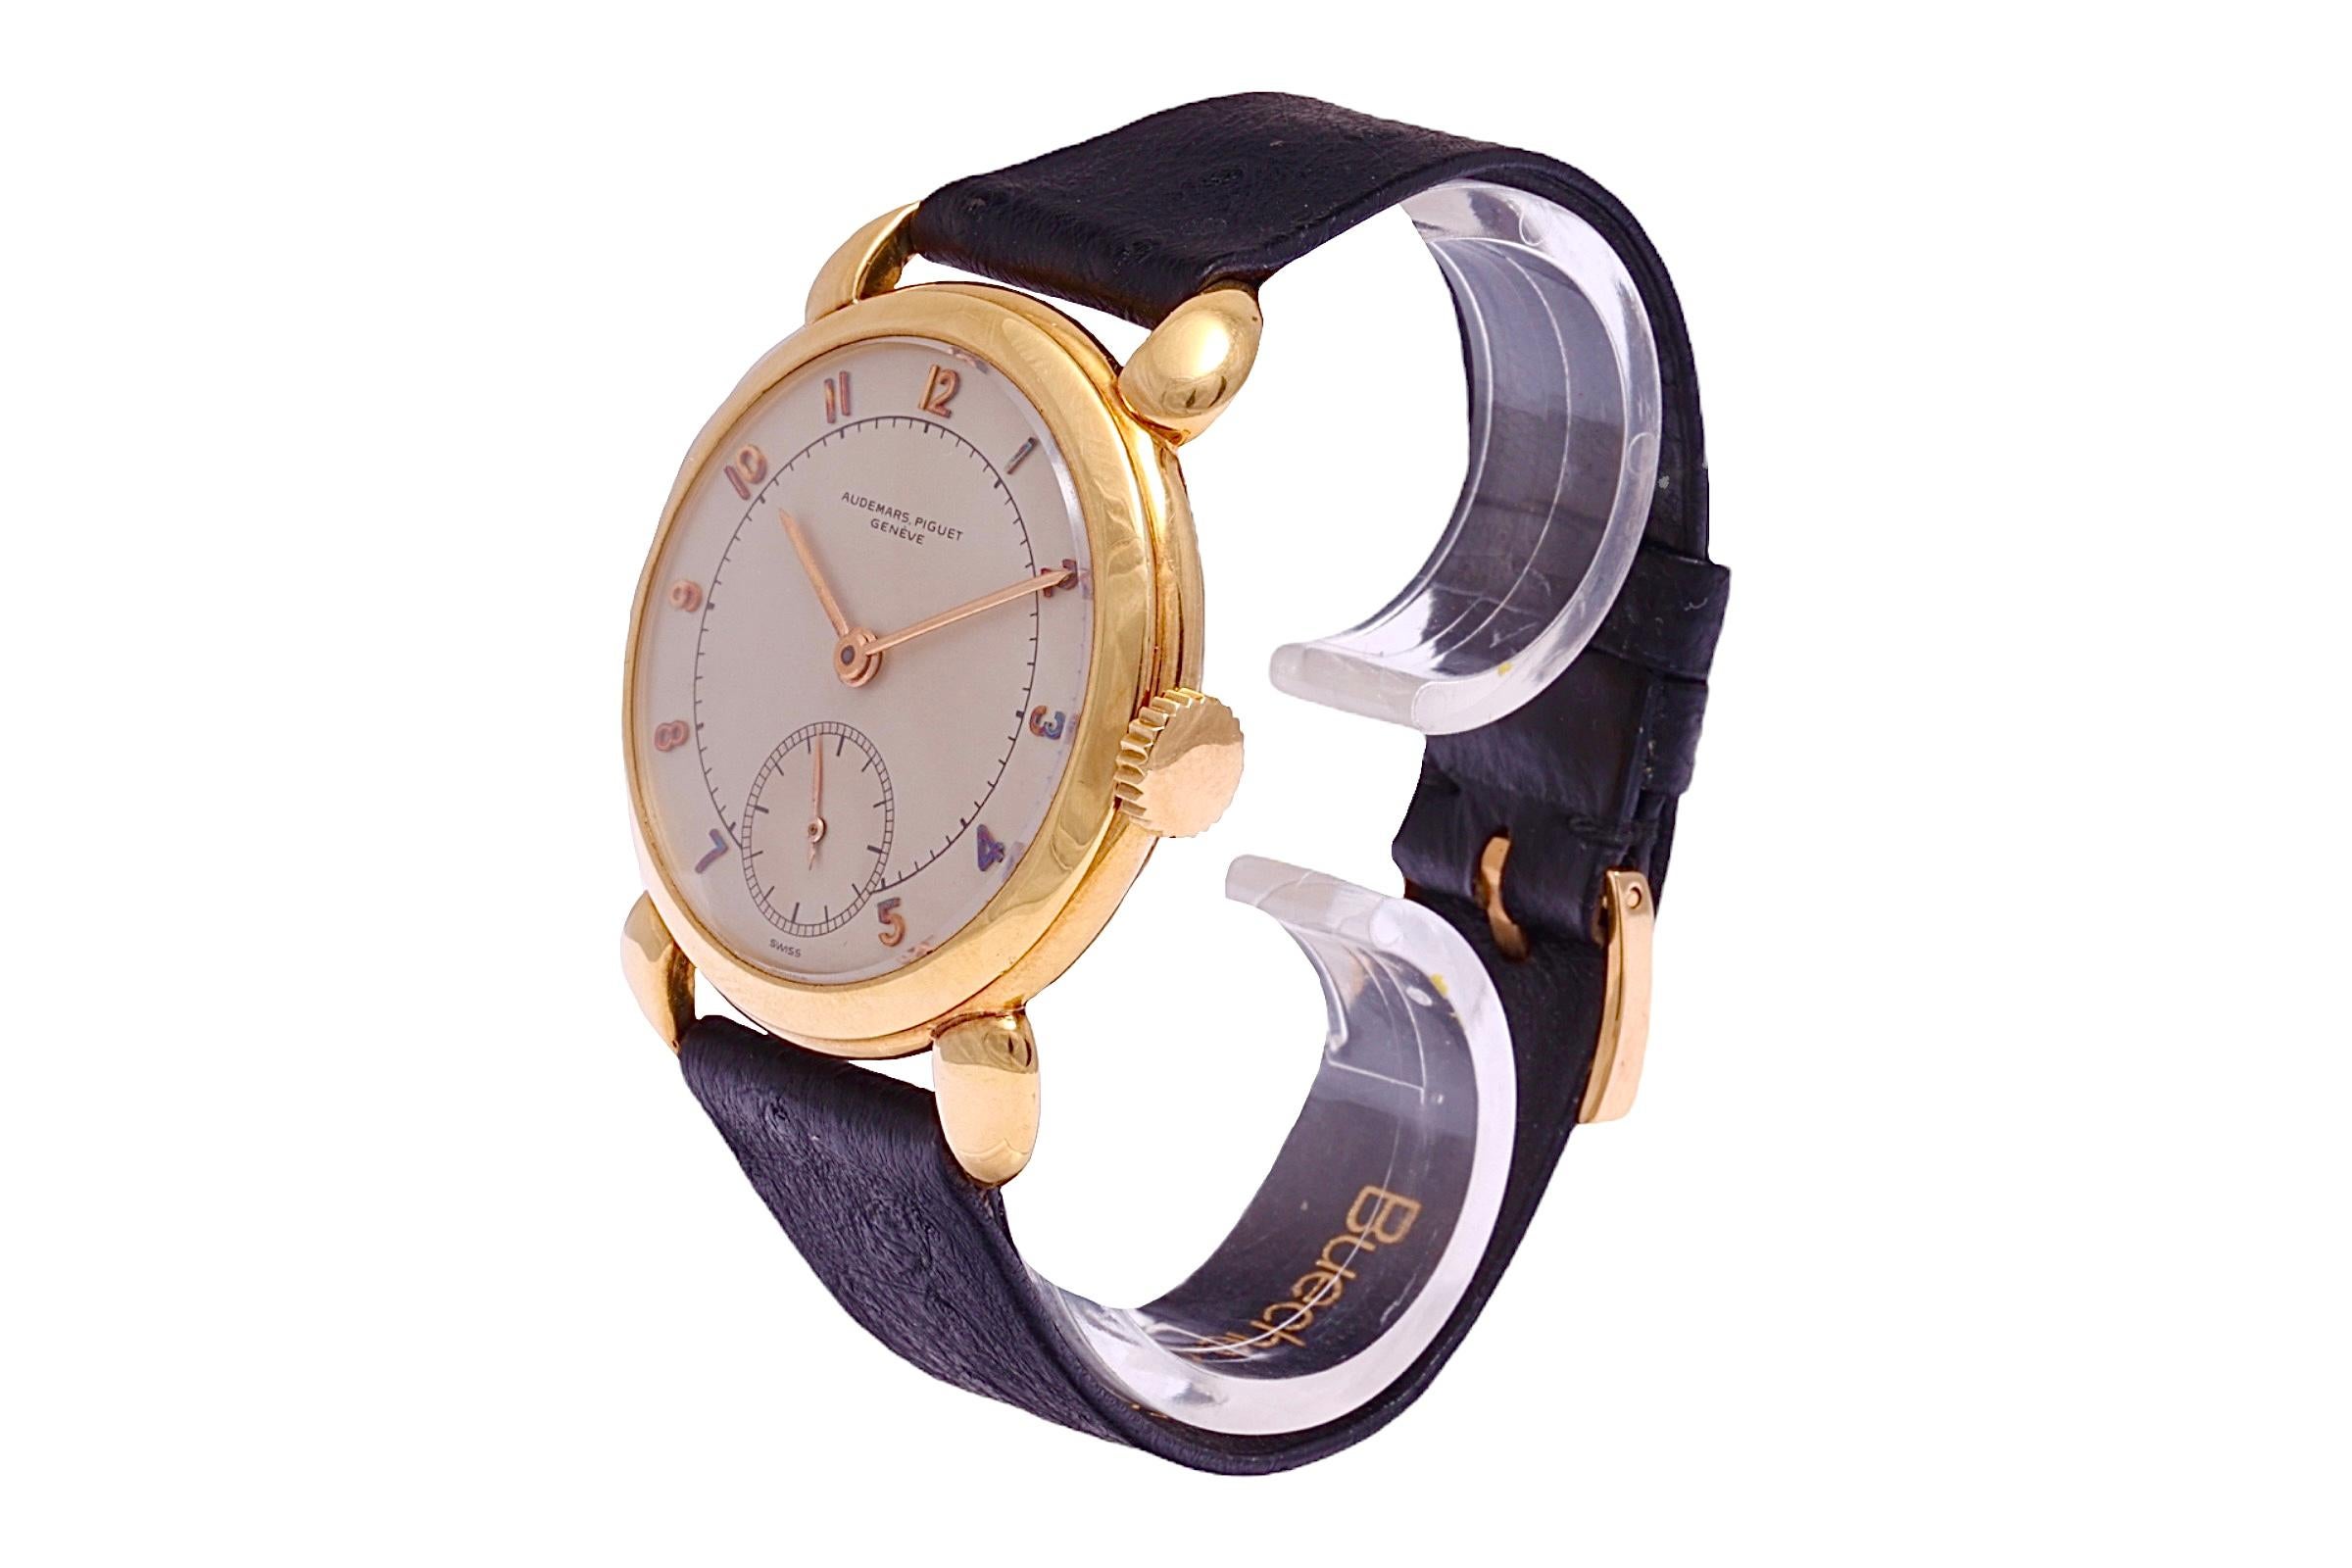 18 Kt Gold Audemars Piguet Calatrava Vintage Rare Collectors Wrist Watch 1940's In Excellent Condition For Sale In Antwerp, BE